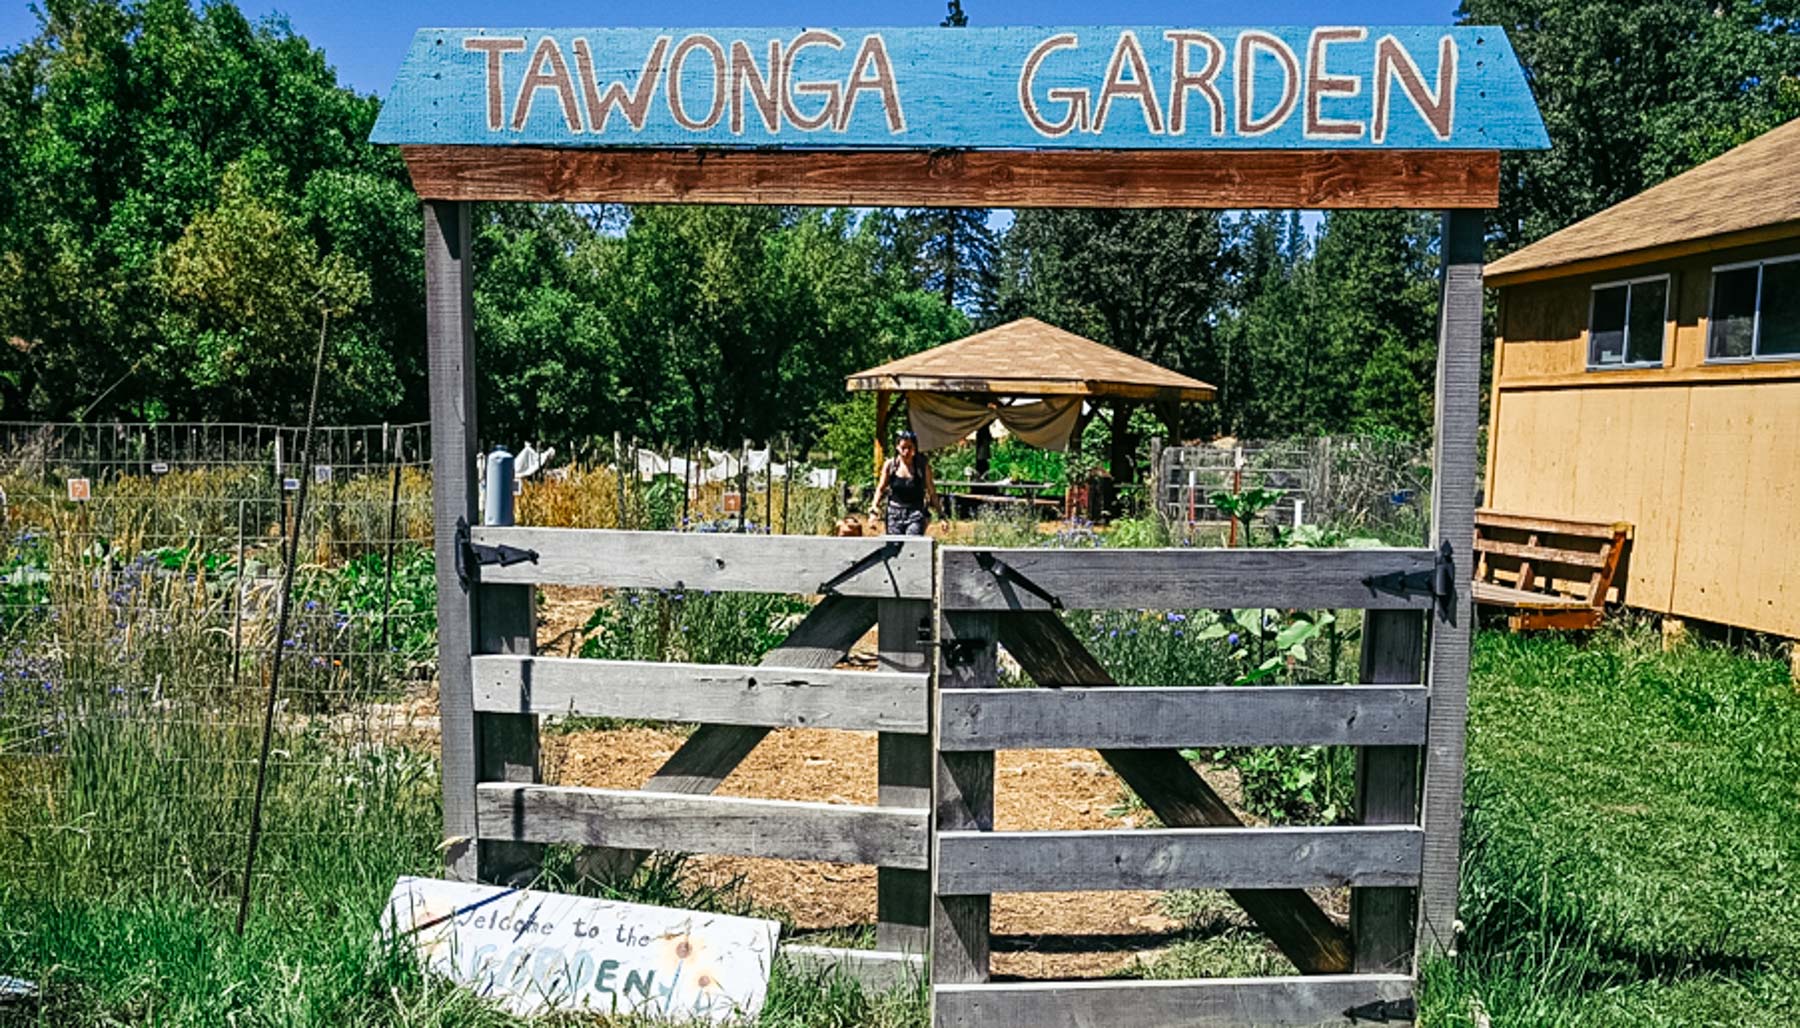 Tawonga garden entrance